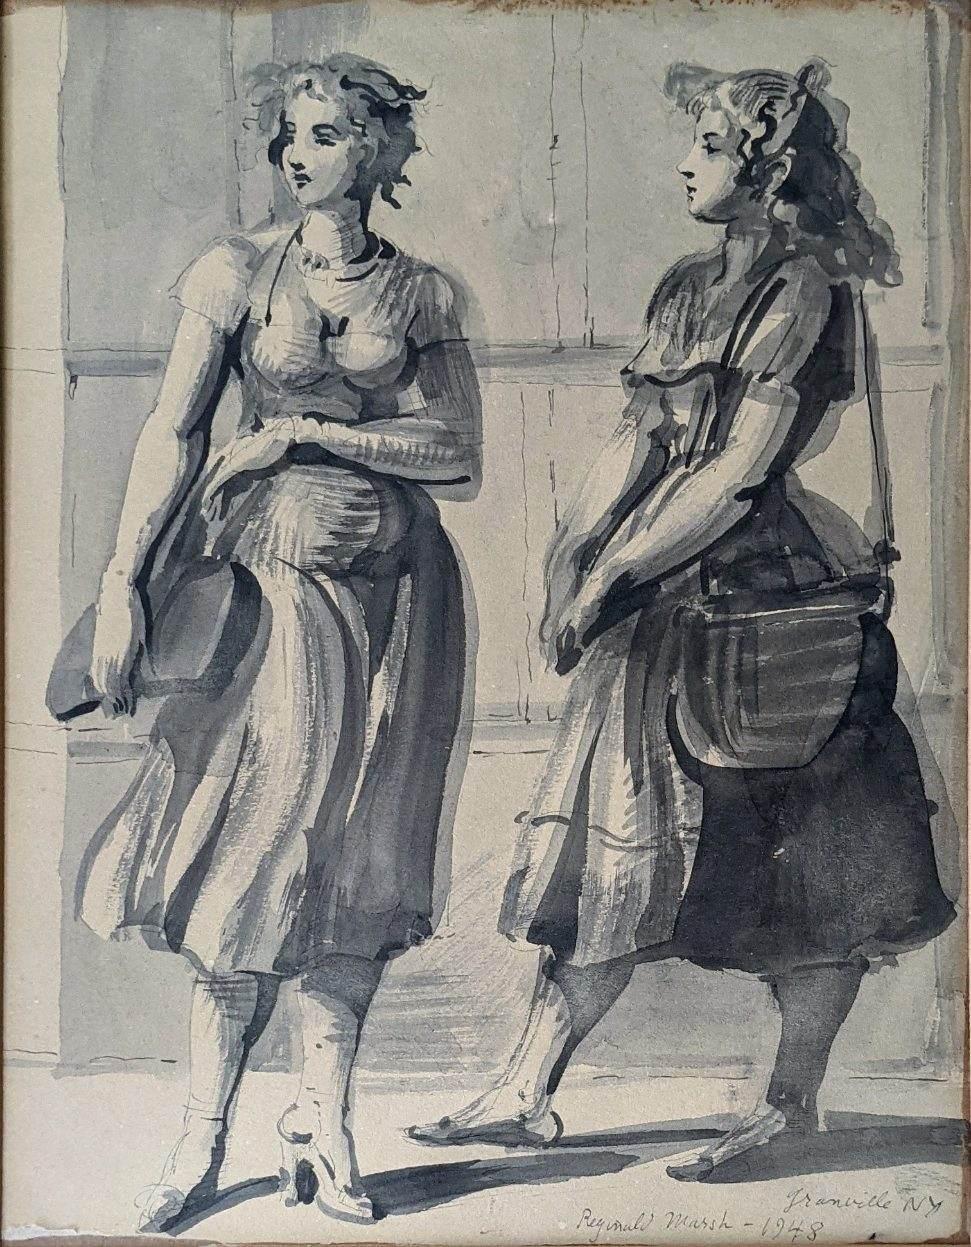 "Two Women Walking, Granville, New York," Reginald Marsh, American Modernism